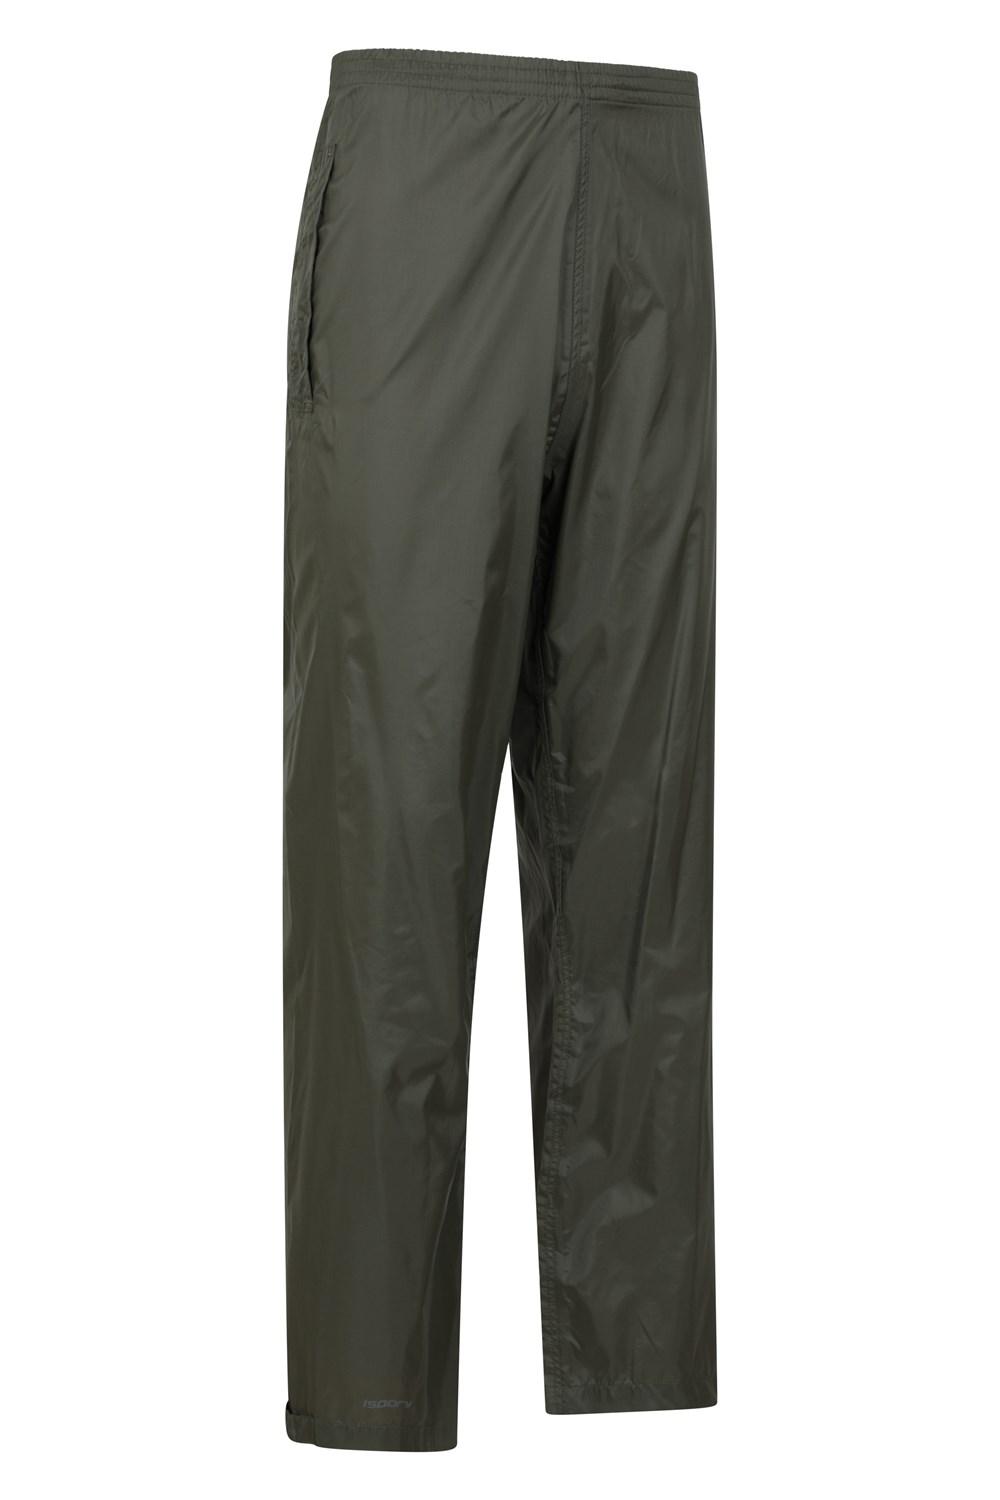 Mountain Warehouse Mens Waterproof Over Trousers Walking Rain Pants ...